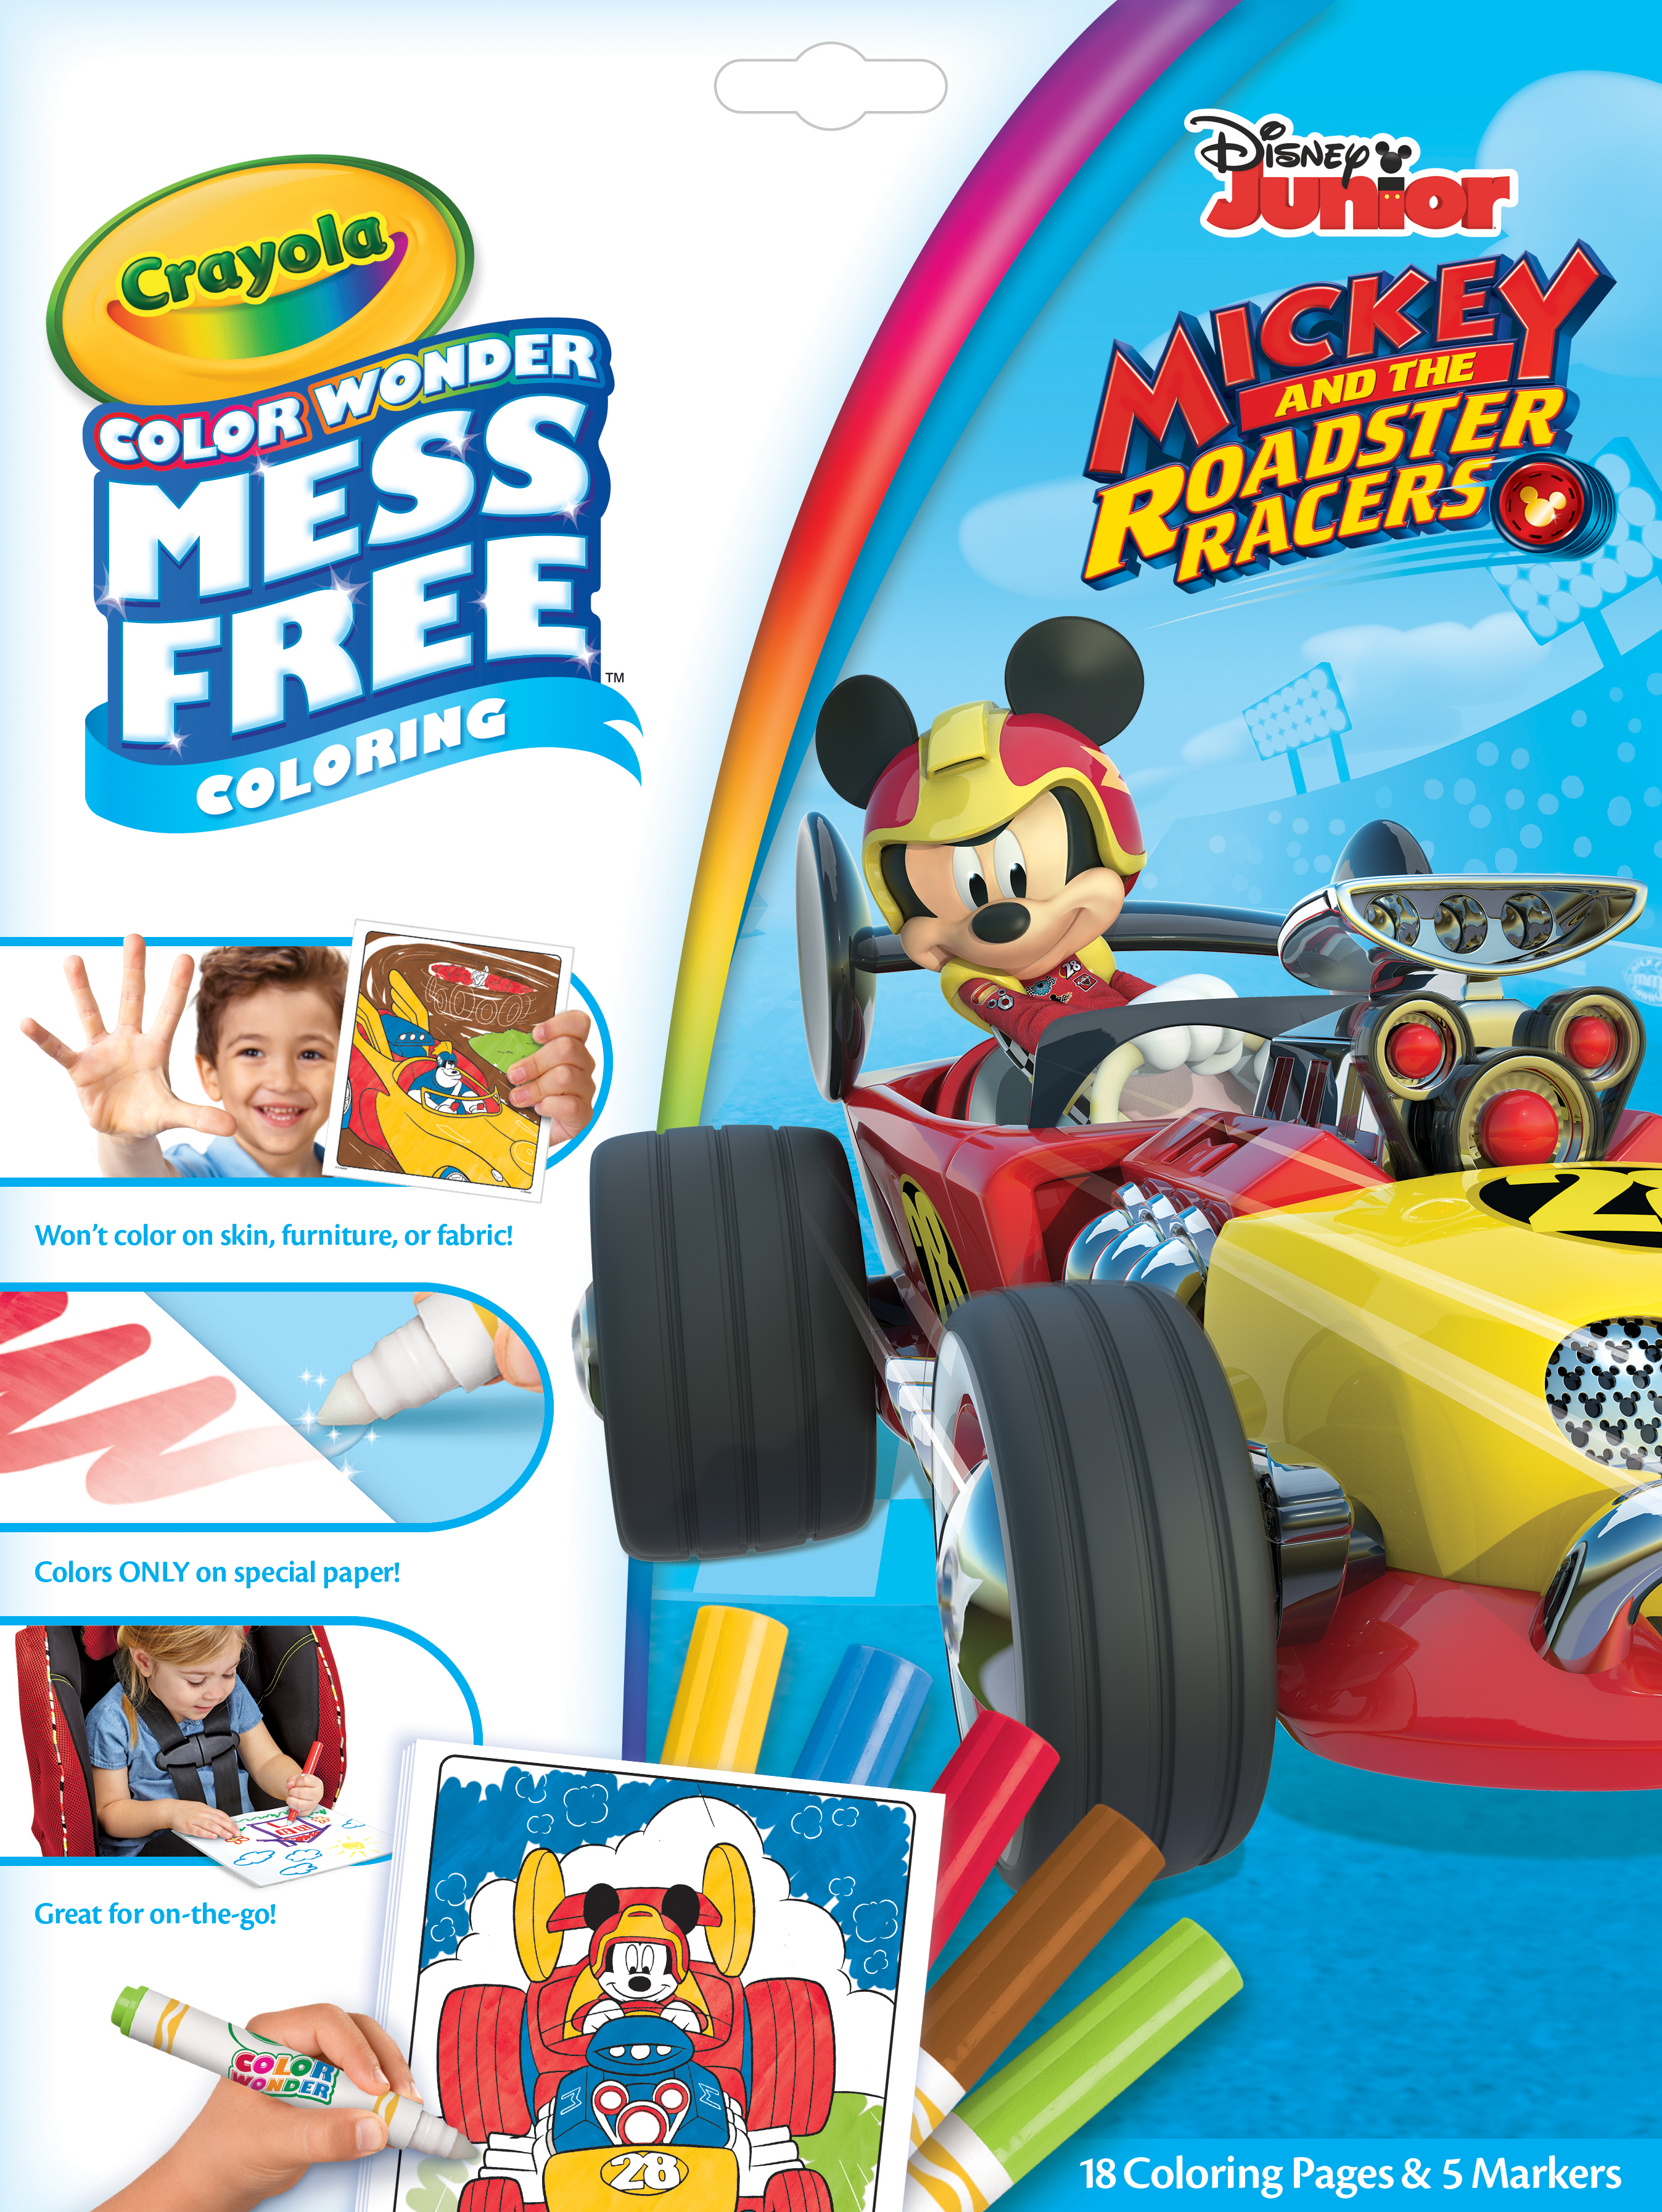 Crayola Color Wonder - Mickey Mouse Roaster